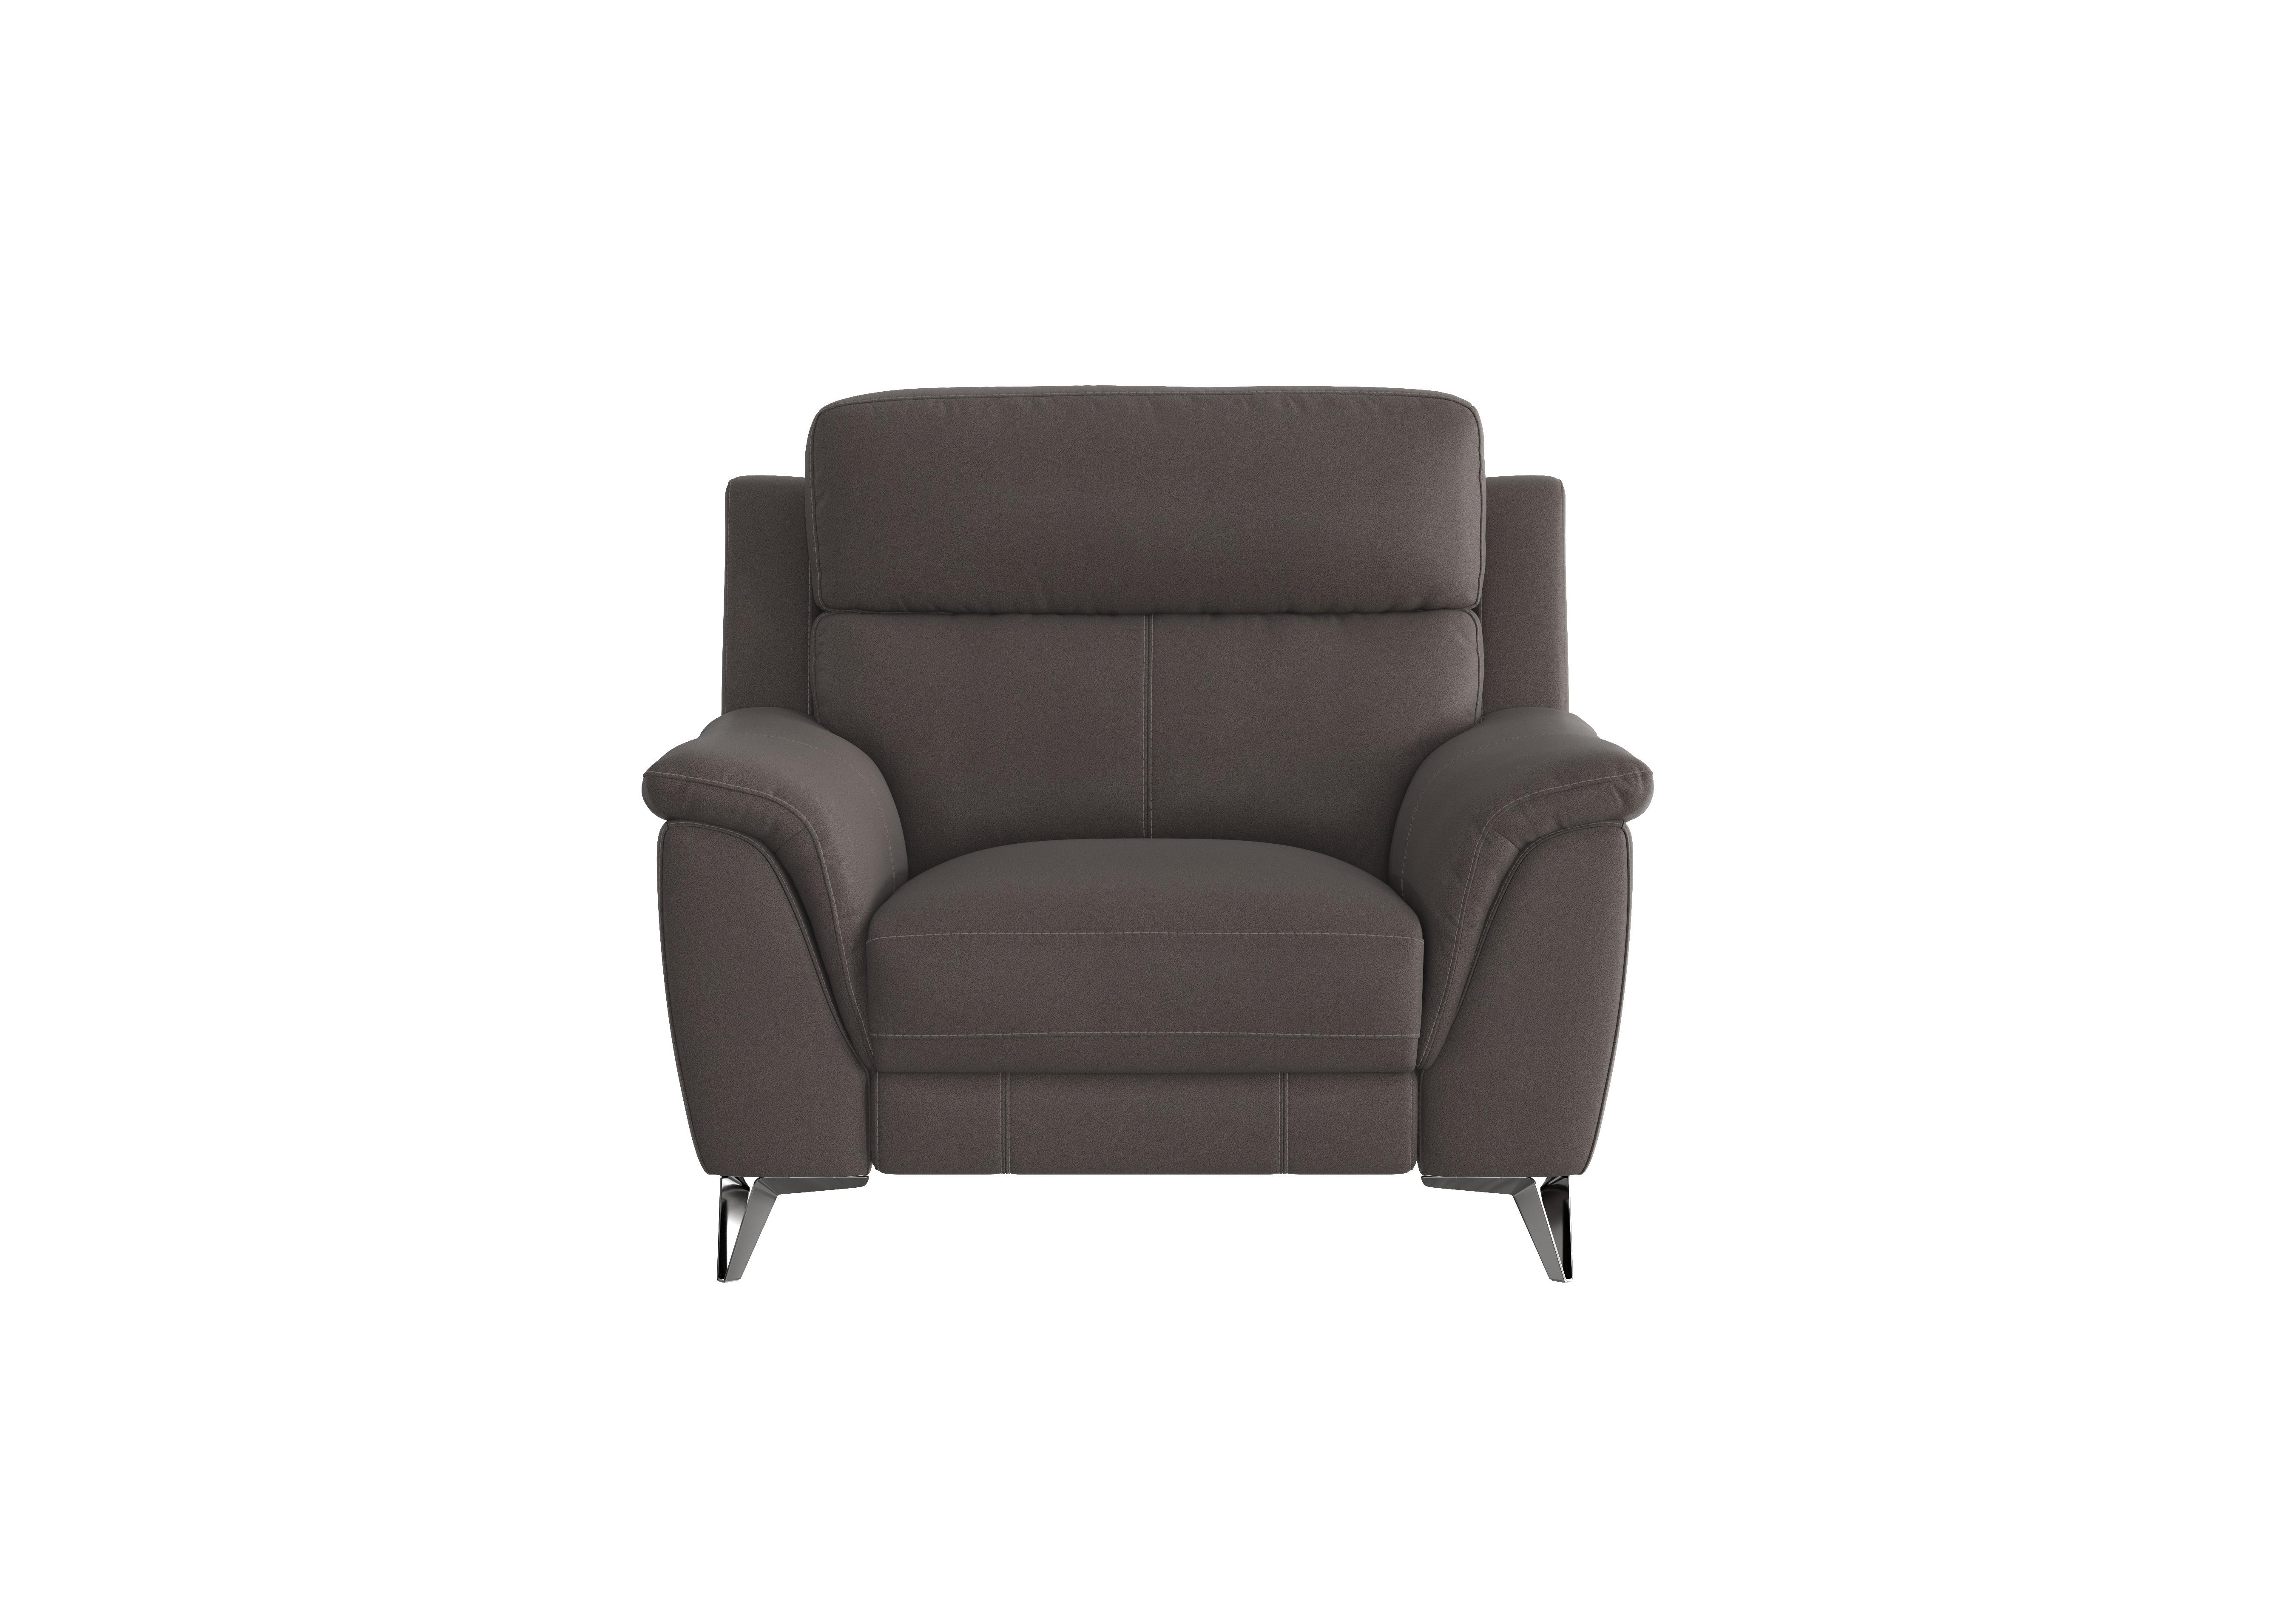 Contempo Fabric Armchair in Bfa-Blj-R16 Grey on Furniture Village